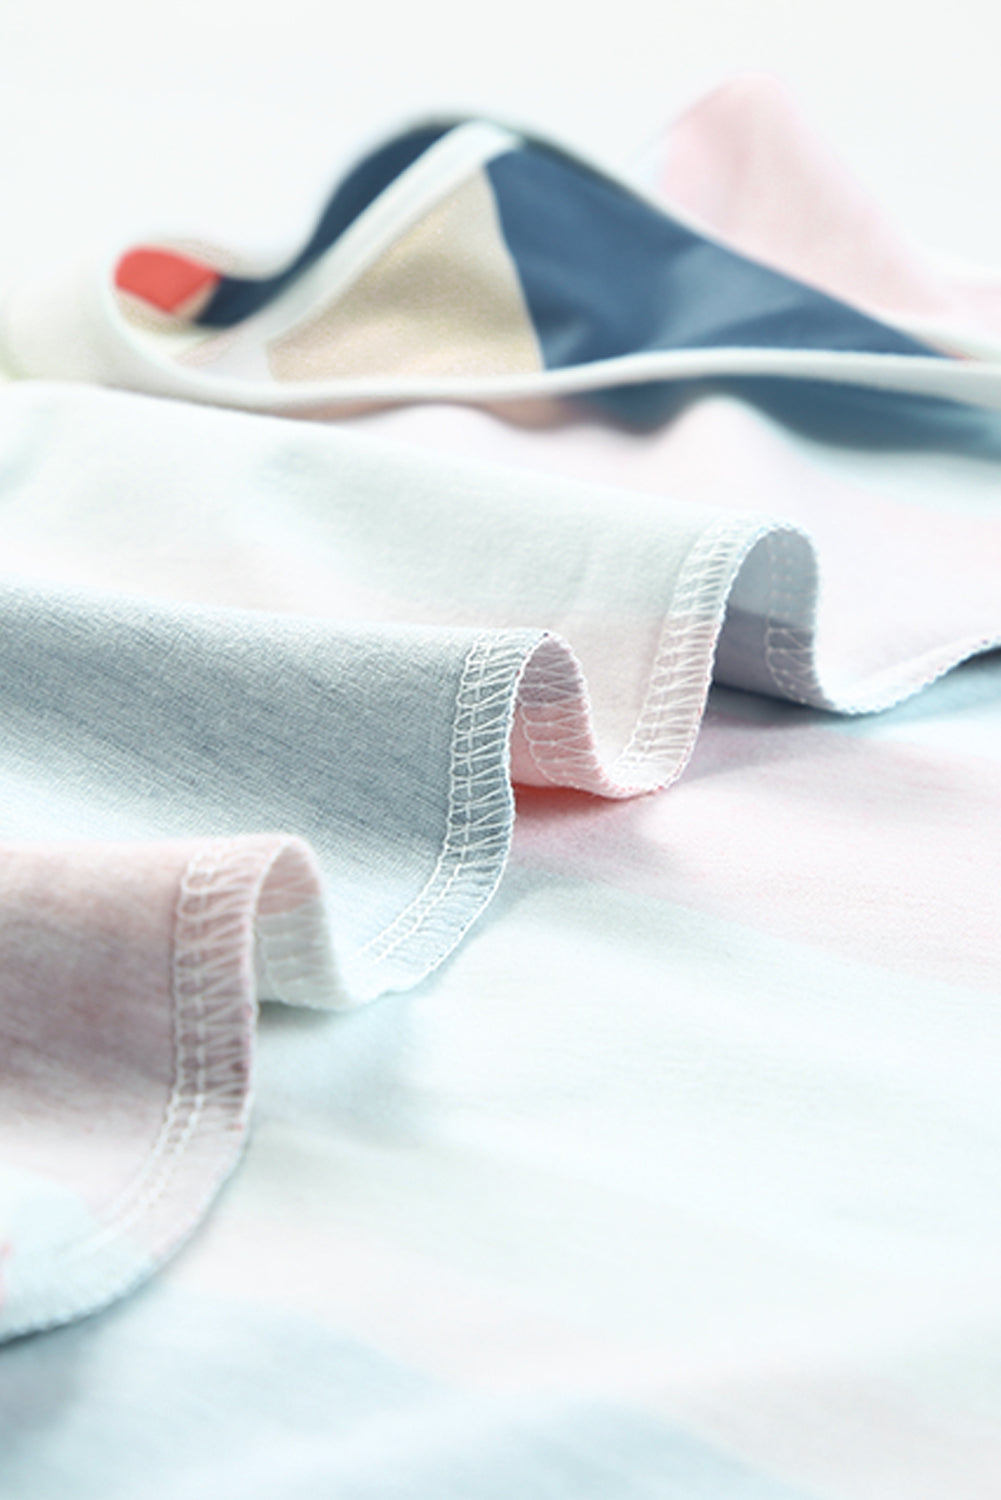 Multicolor Striped Color Block Ribbed Knit Lace-up Slit Tank Dress - Nicole Lee Apparel